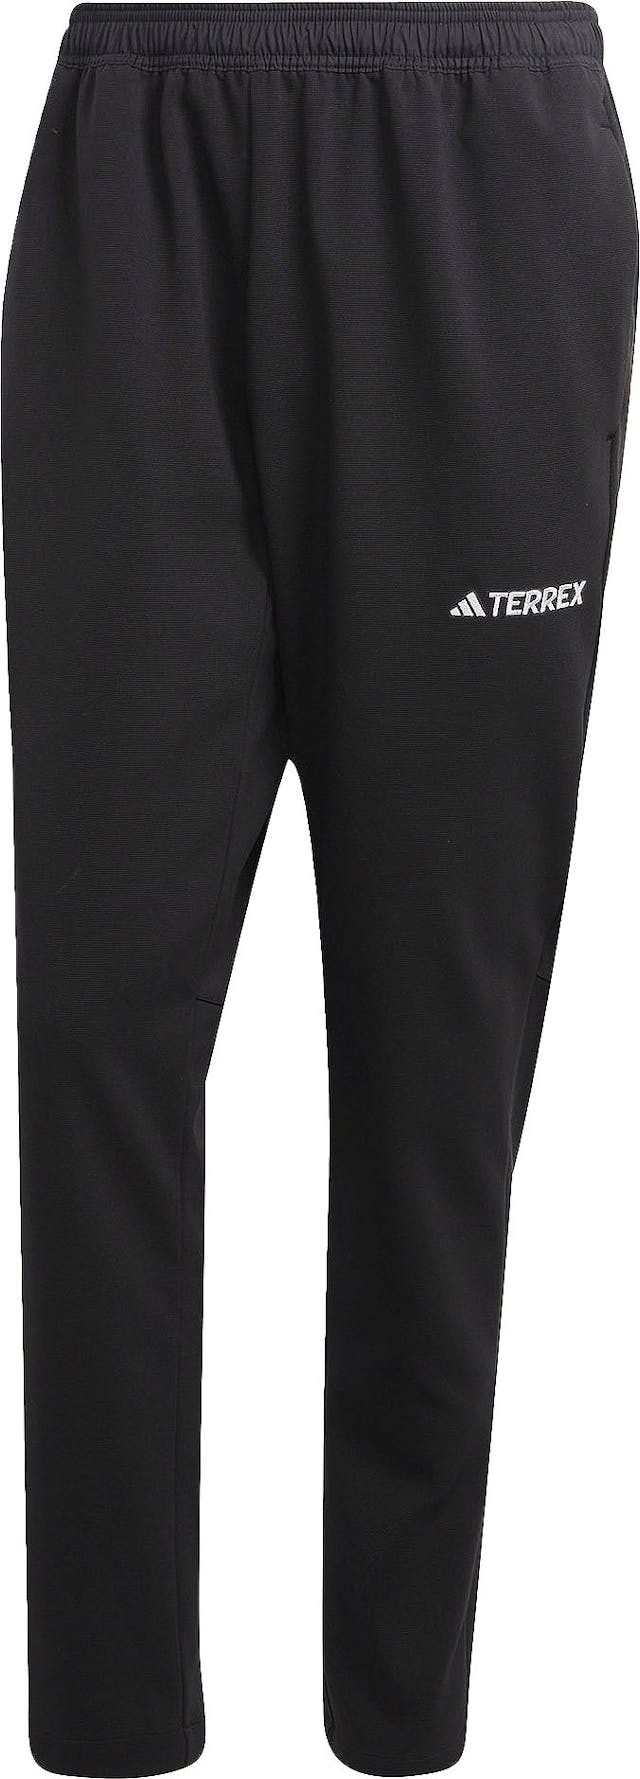 Product image for Terrex Multi Knit Tracksuit Bottoms - Men's